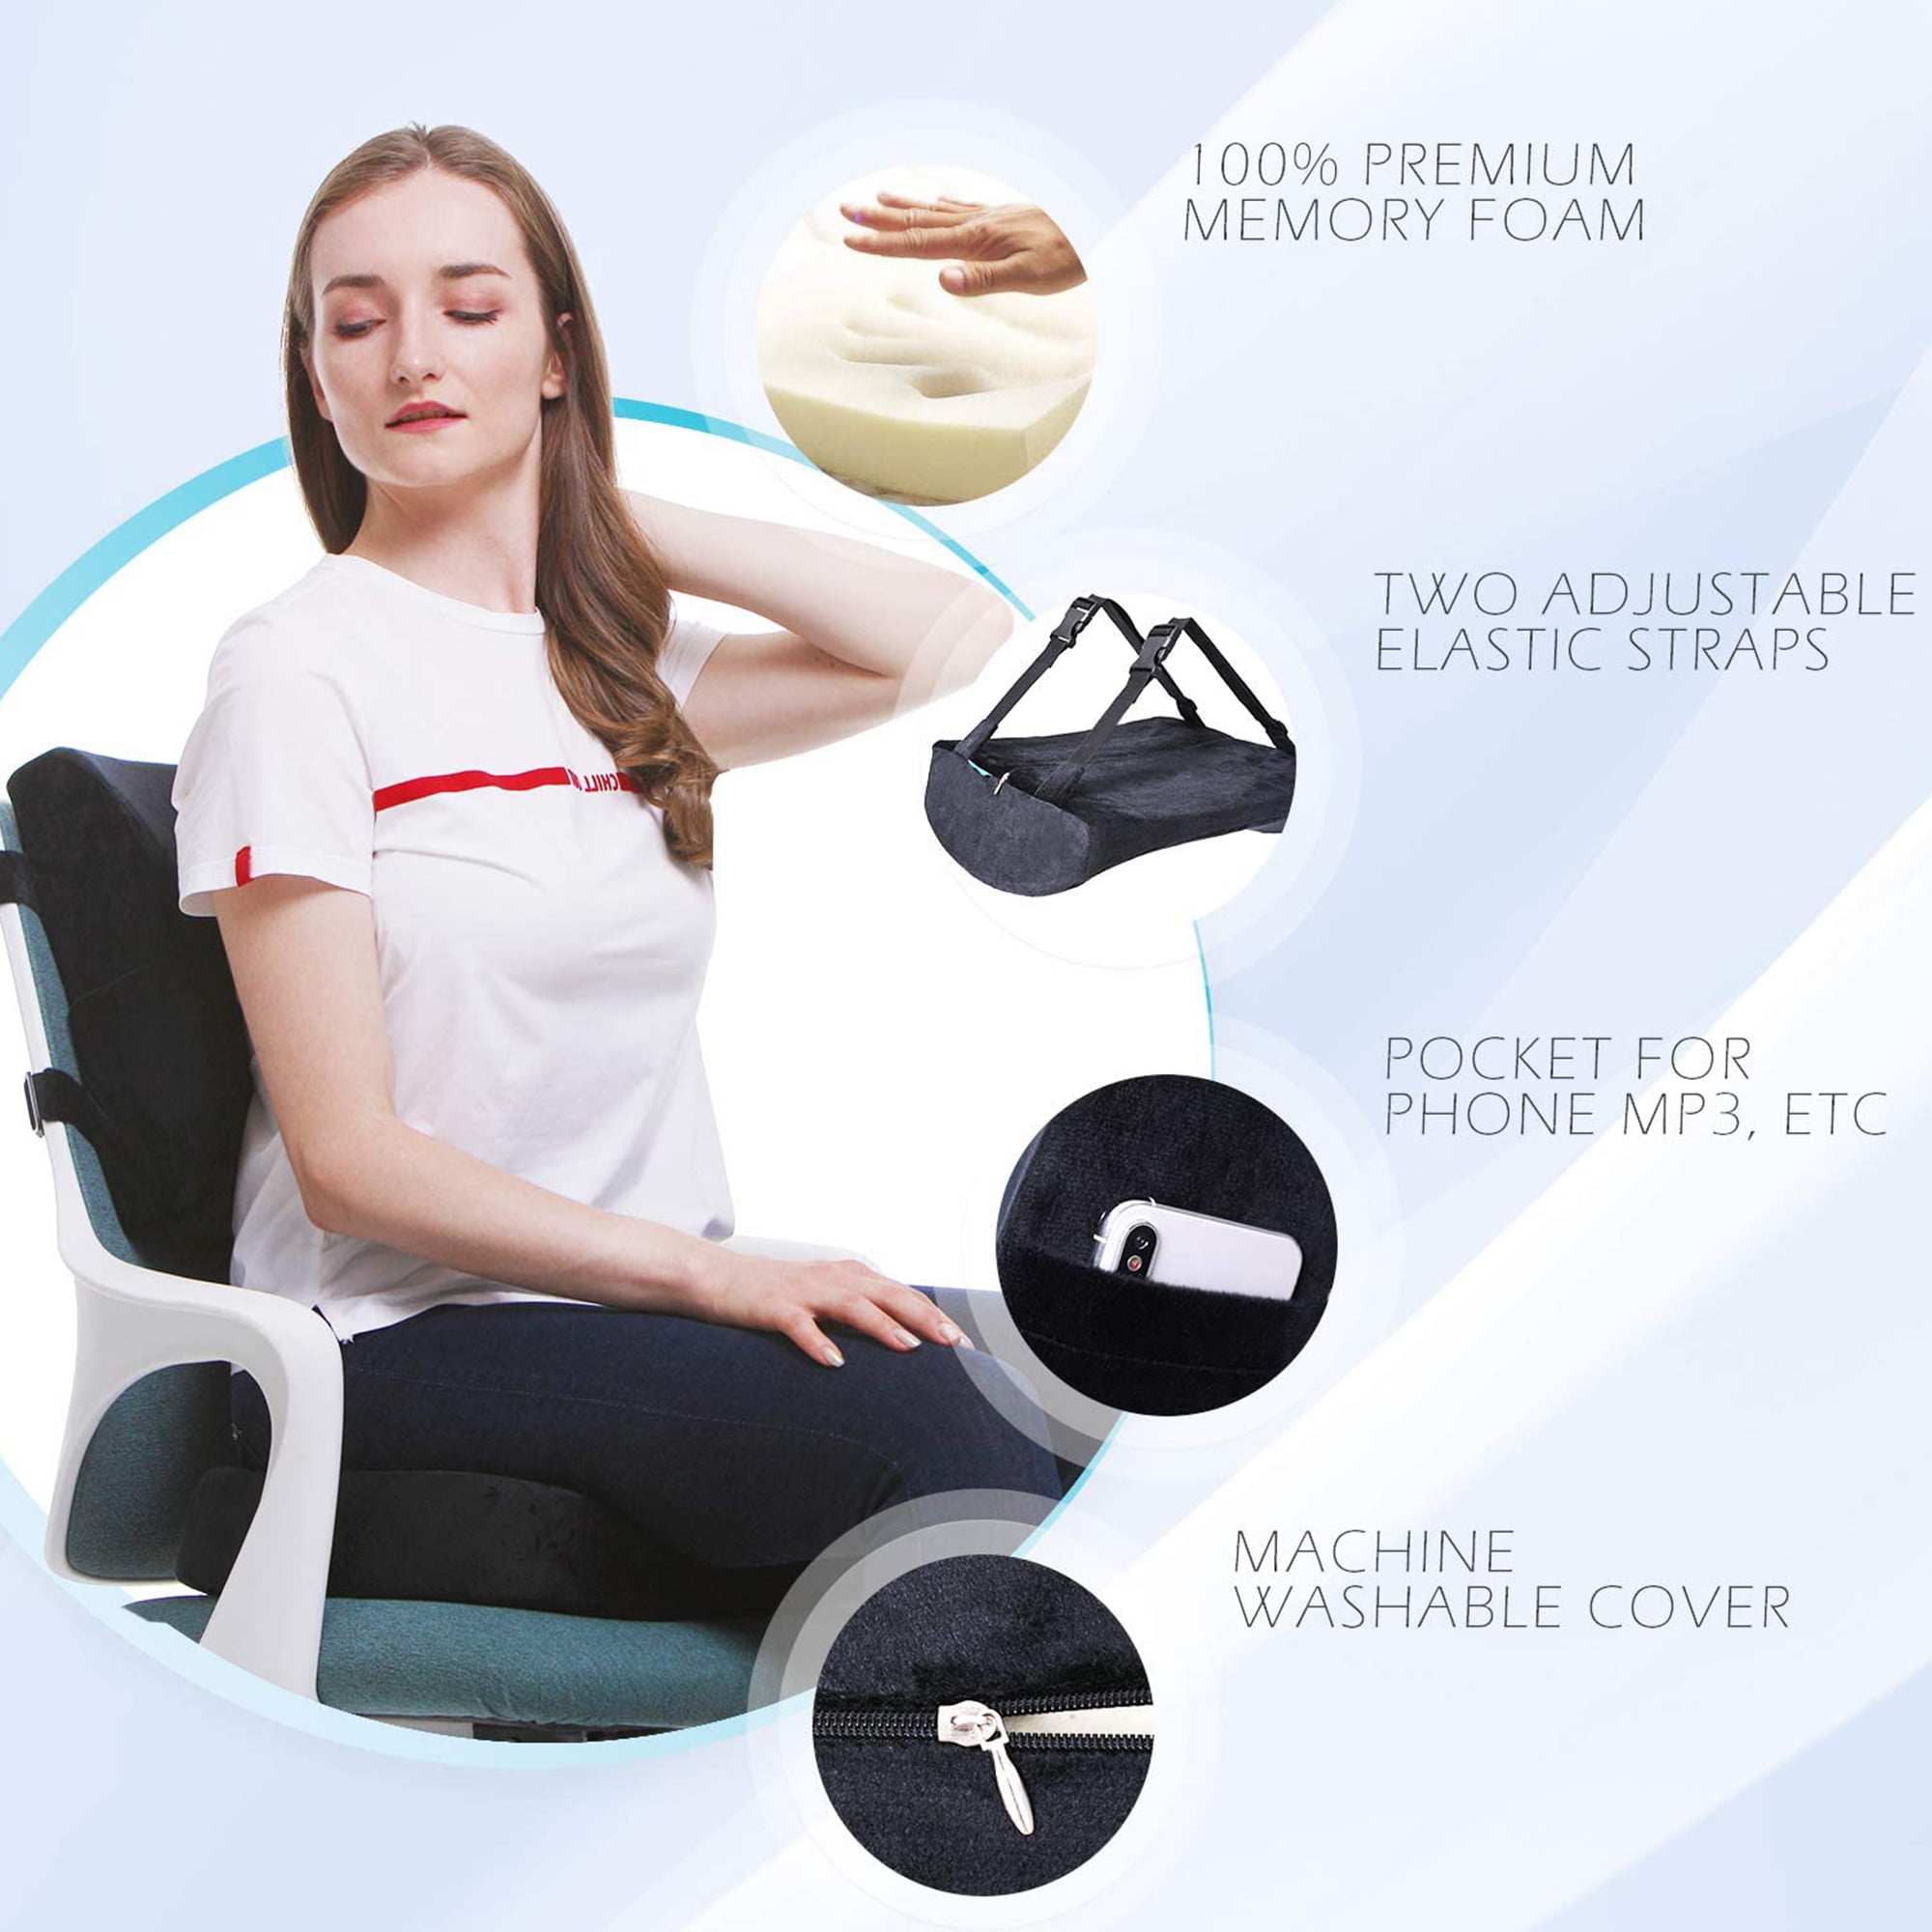  QUTOOL Orthopedic Seat Cushion and Lumbar Support